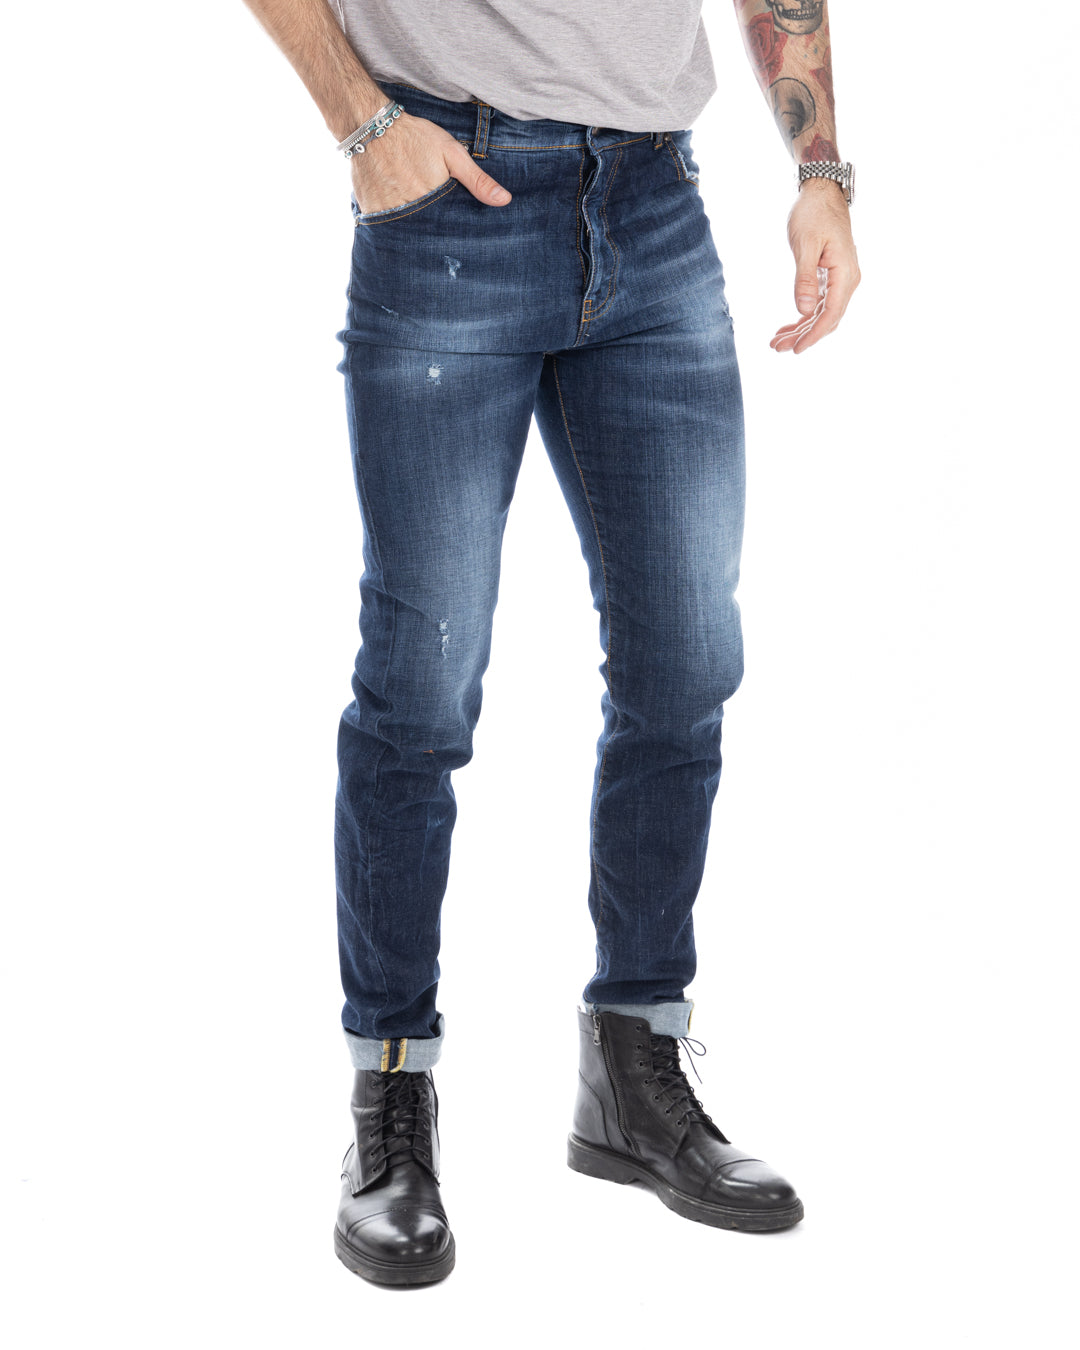 Soho - jeans skinny lavaggio chiaro